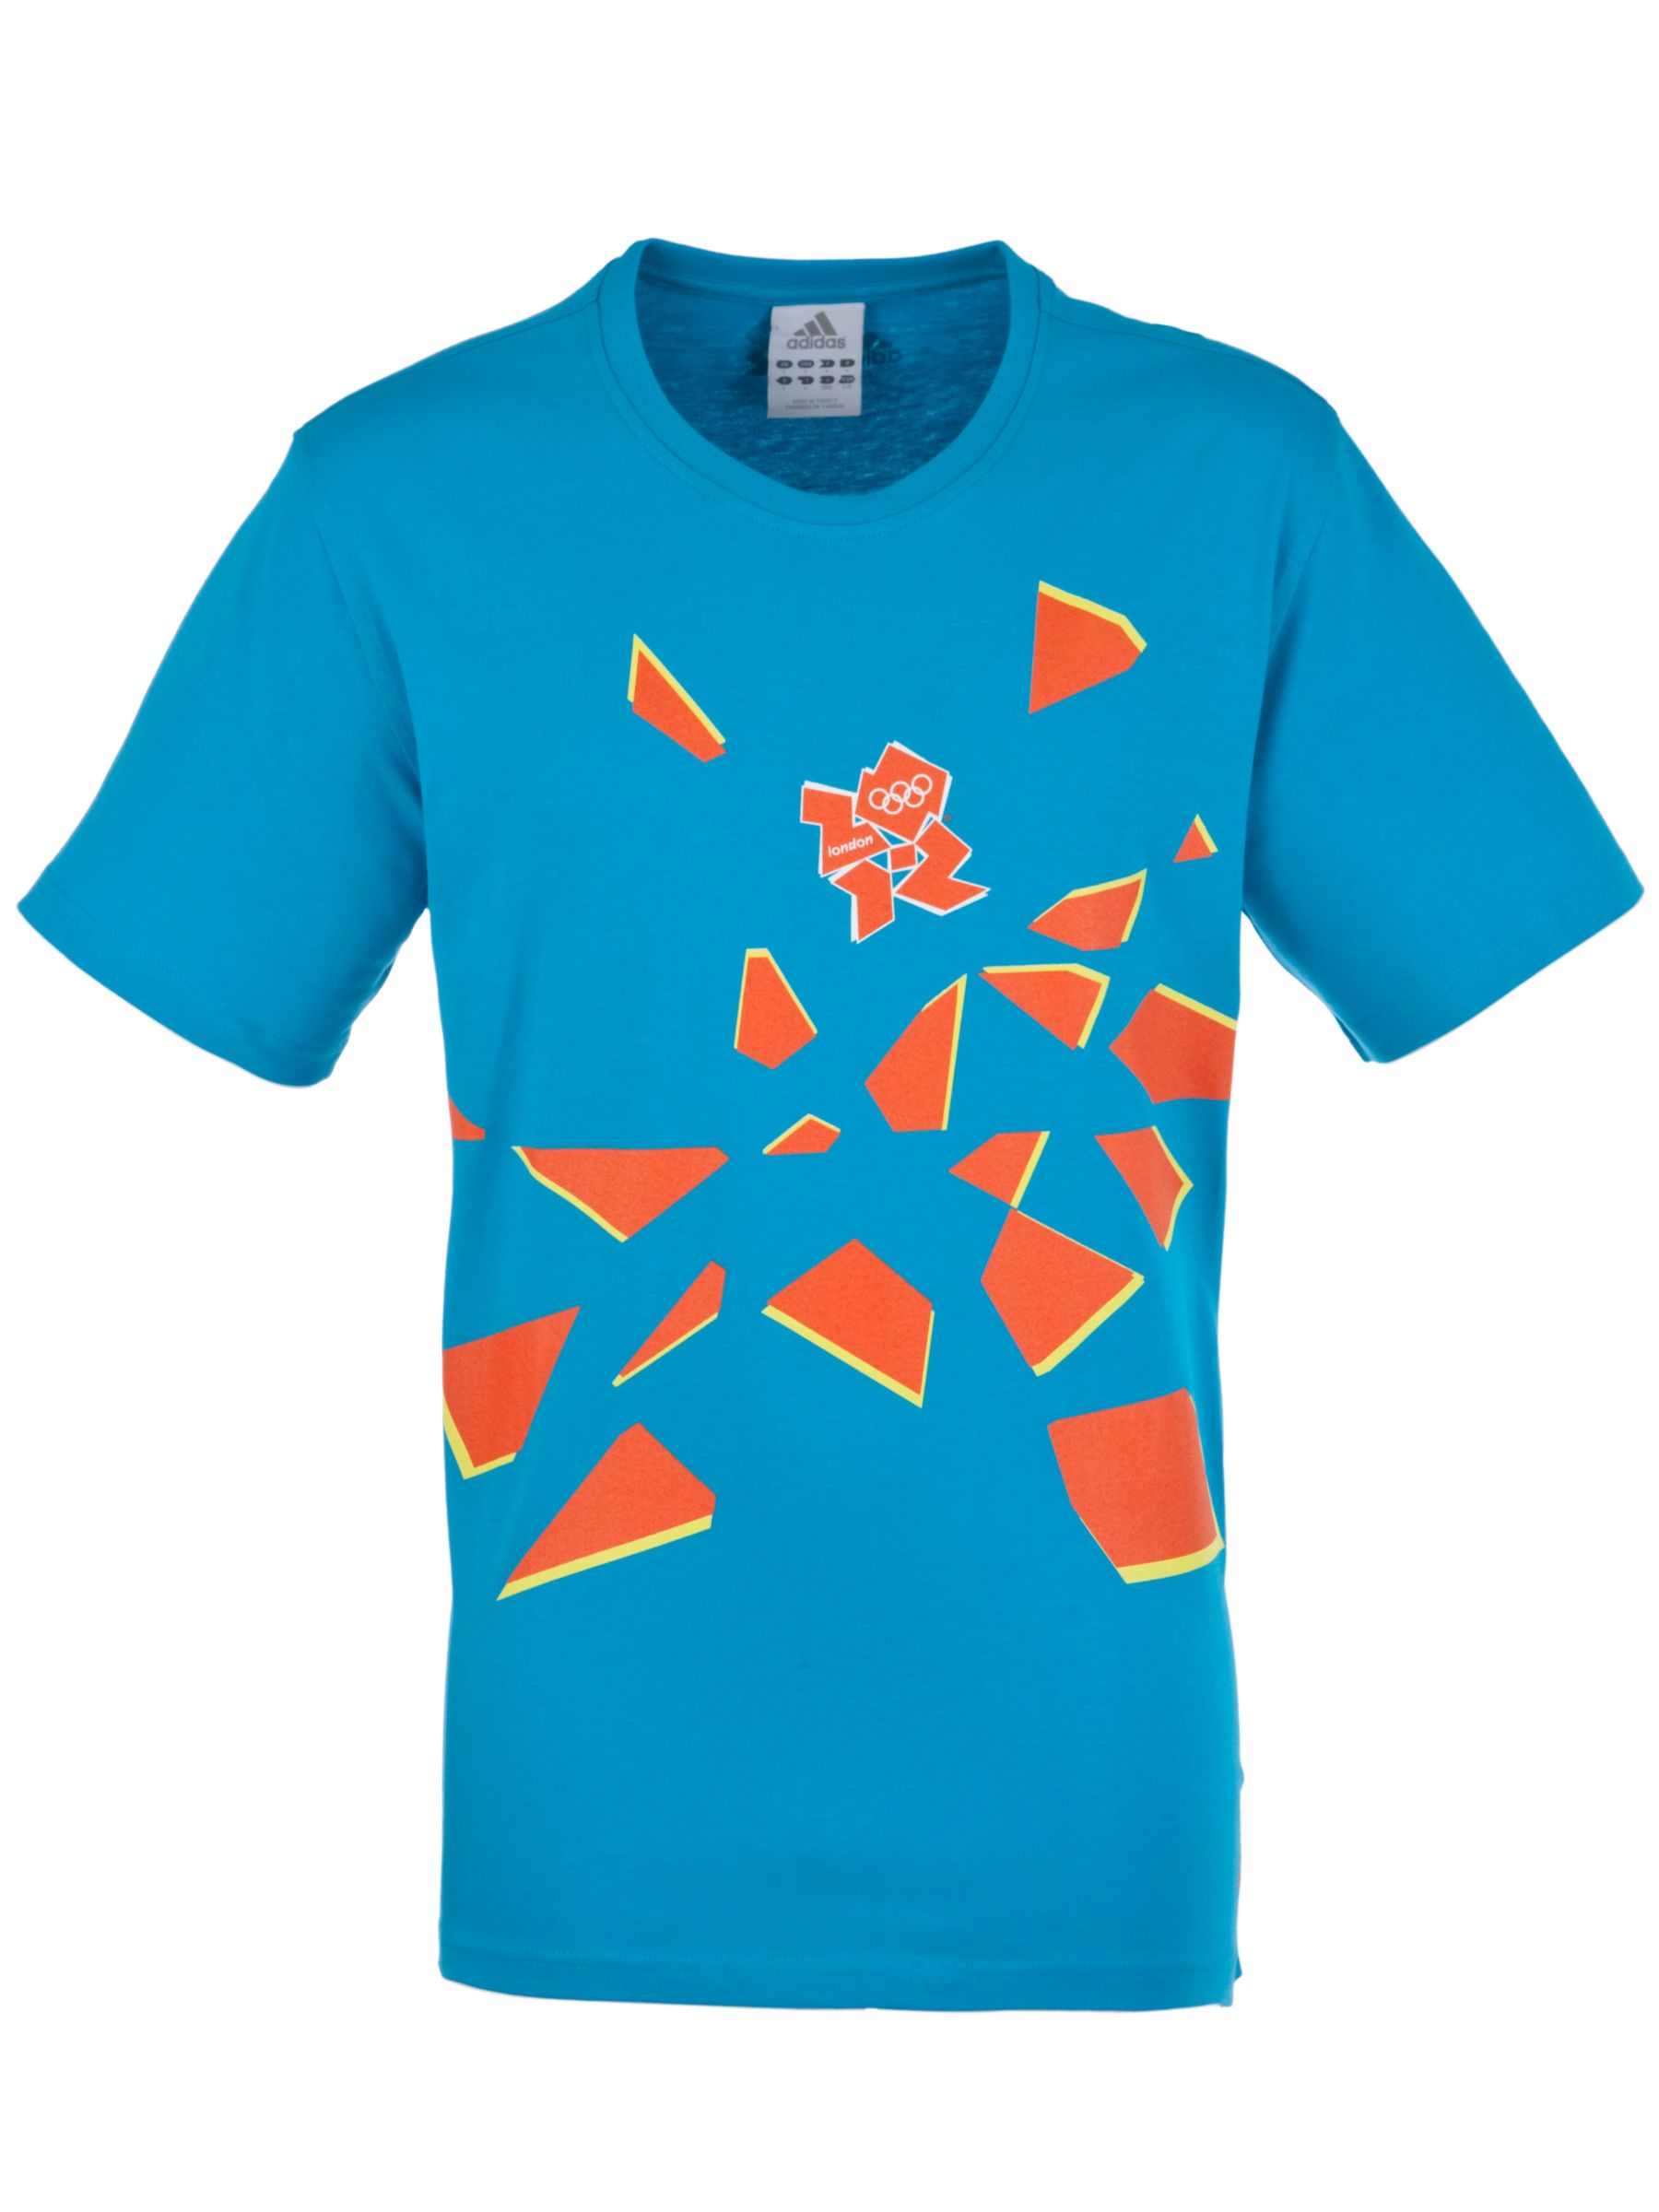 London 2012 Olympic Shards T-Shirt, Blue